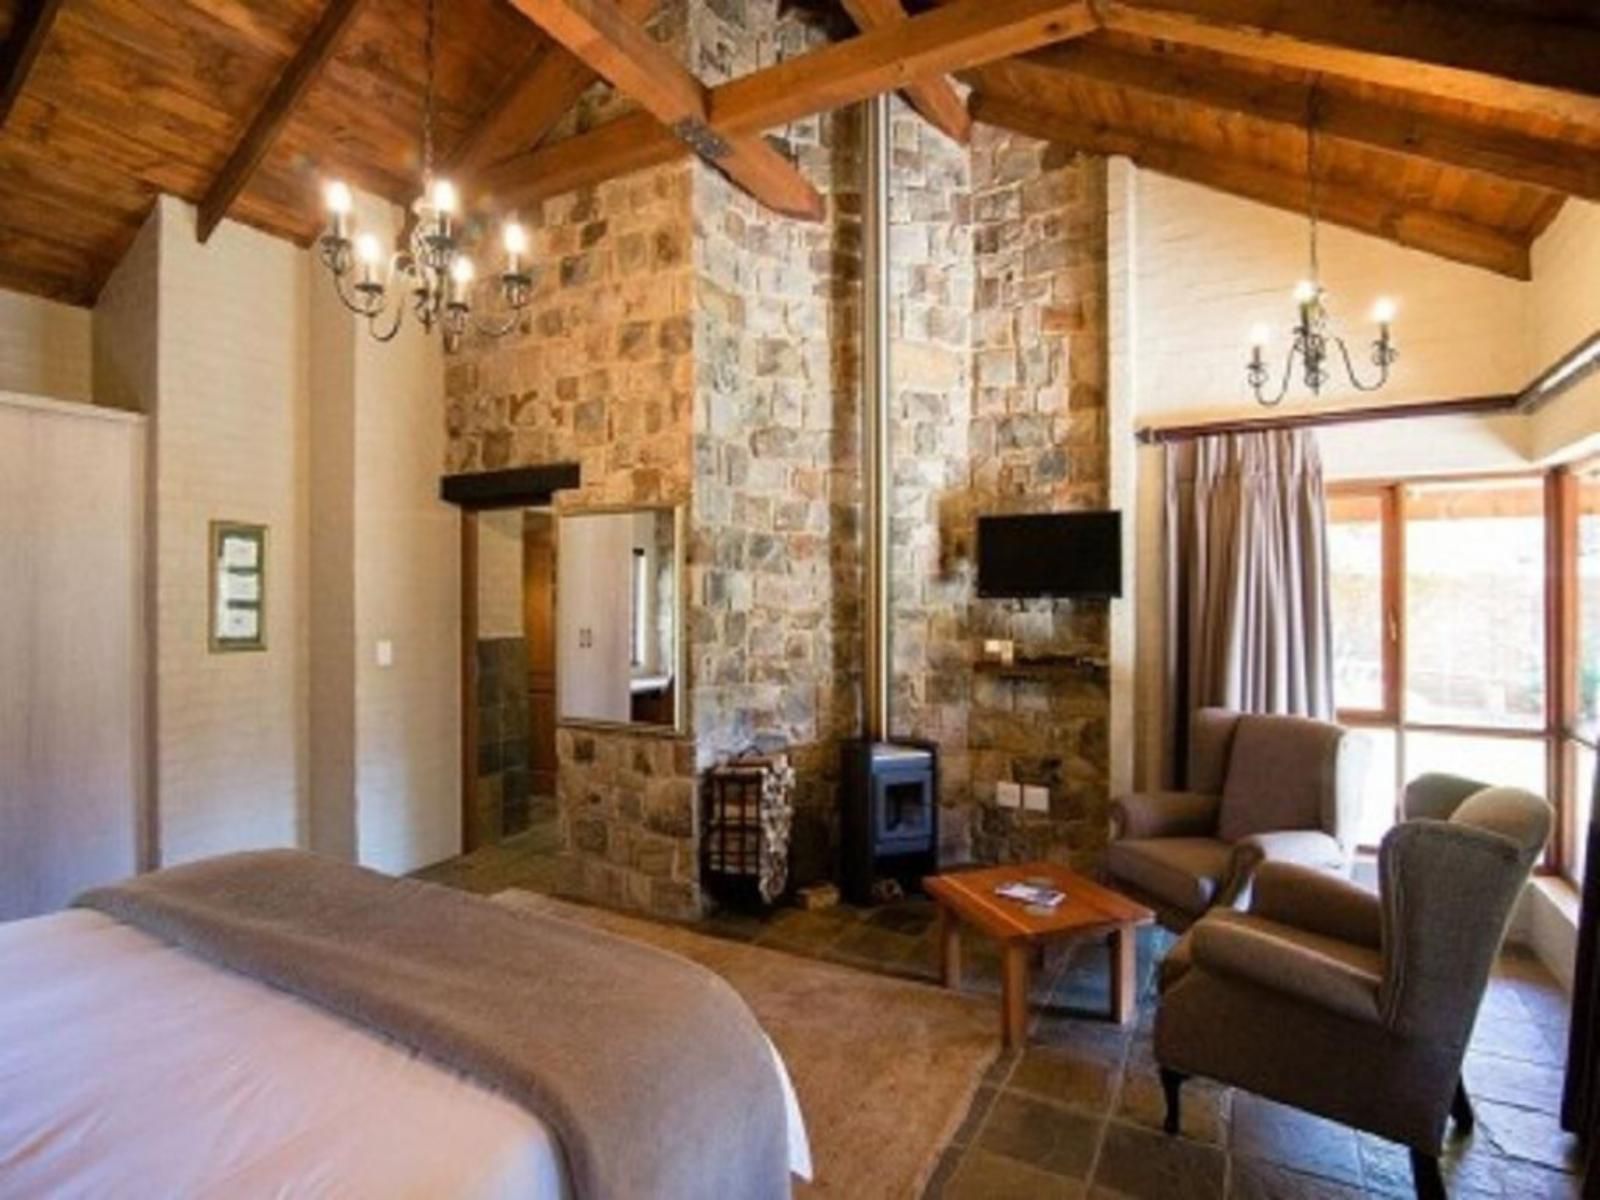 Big Oak Cottages Dullstroom Mpumalanga South Africa Cabin, Building, Architecture, Bedroom